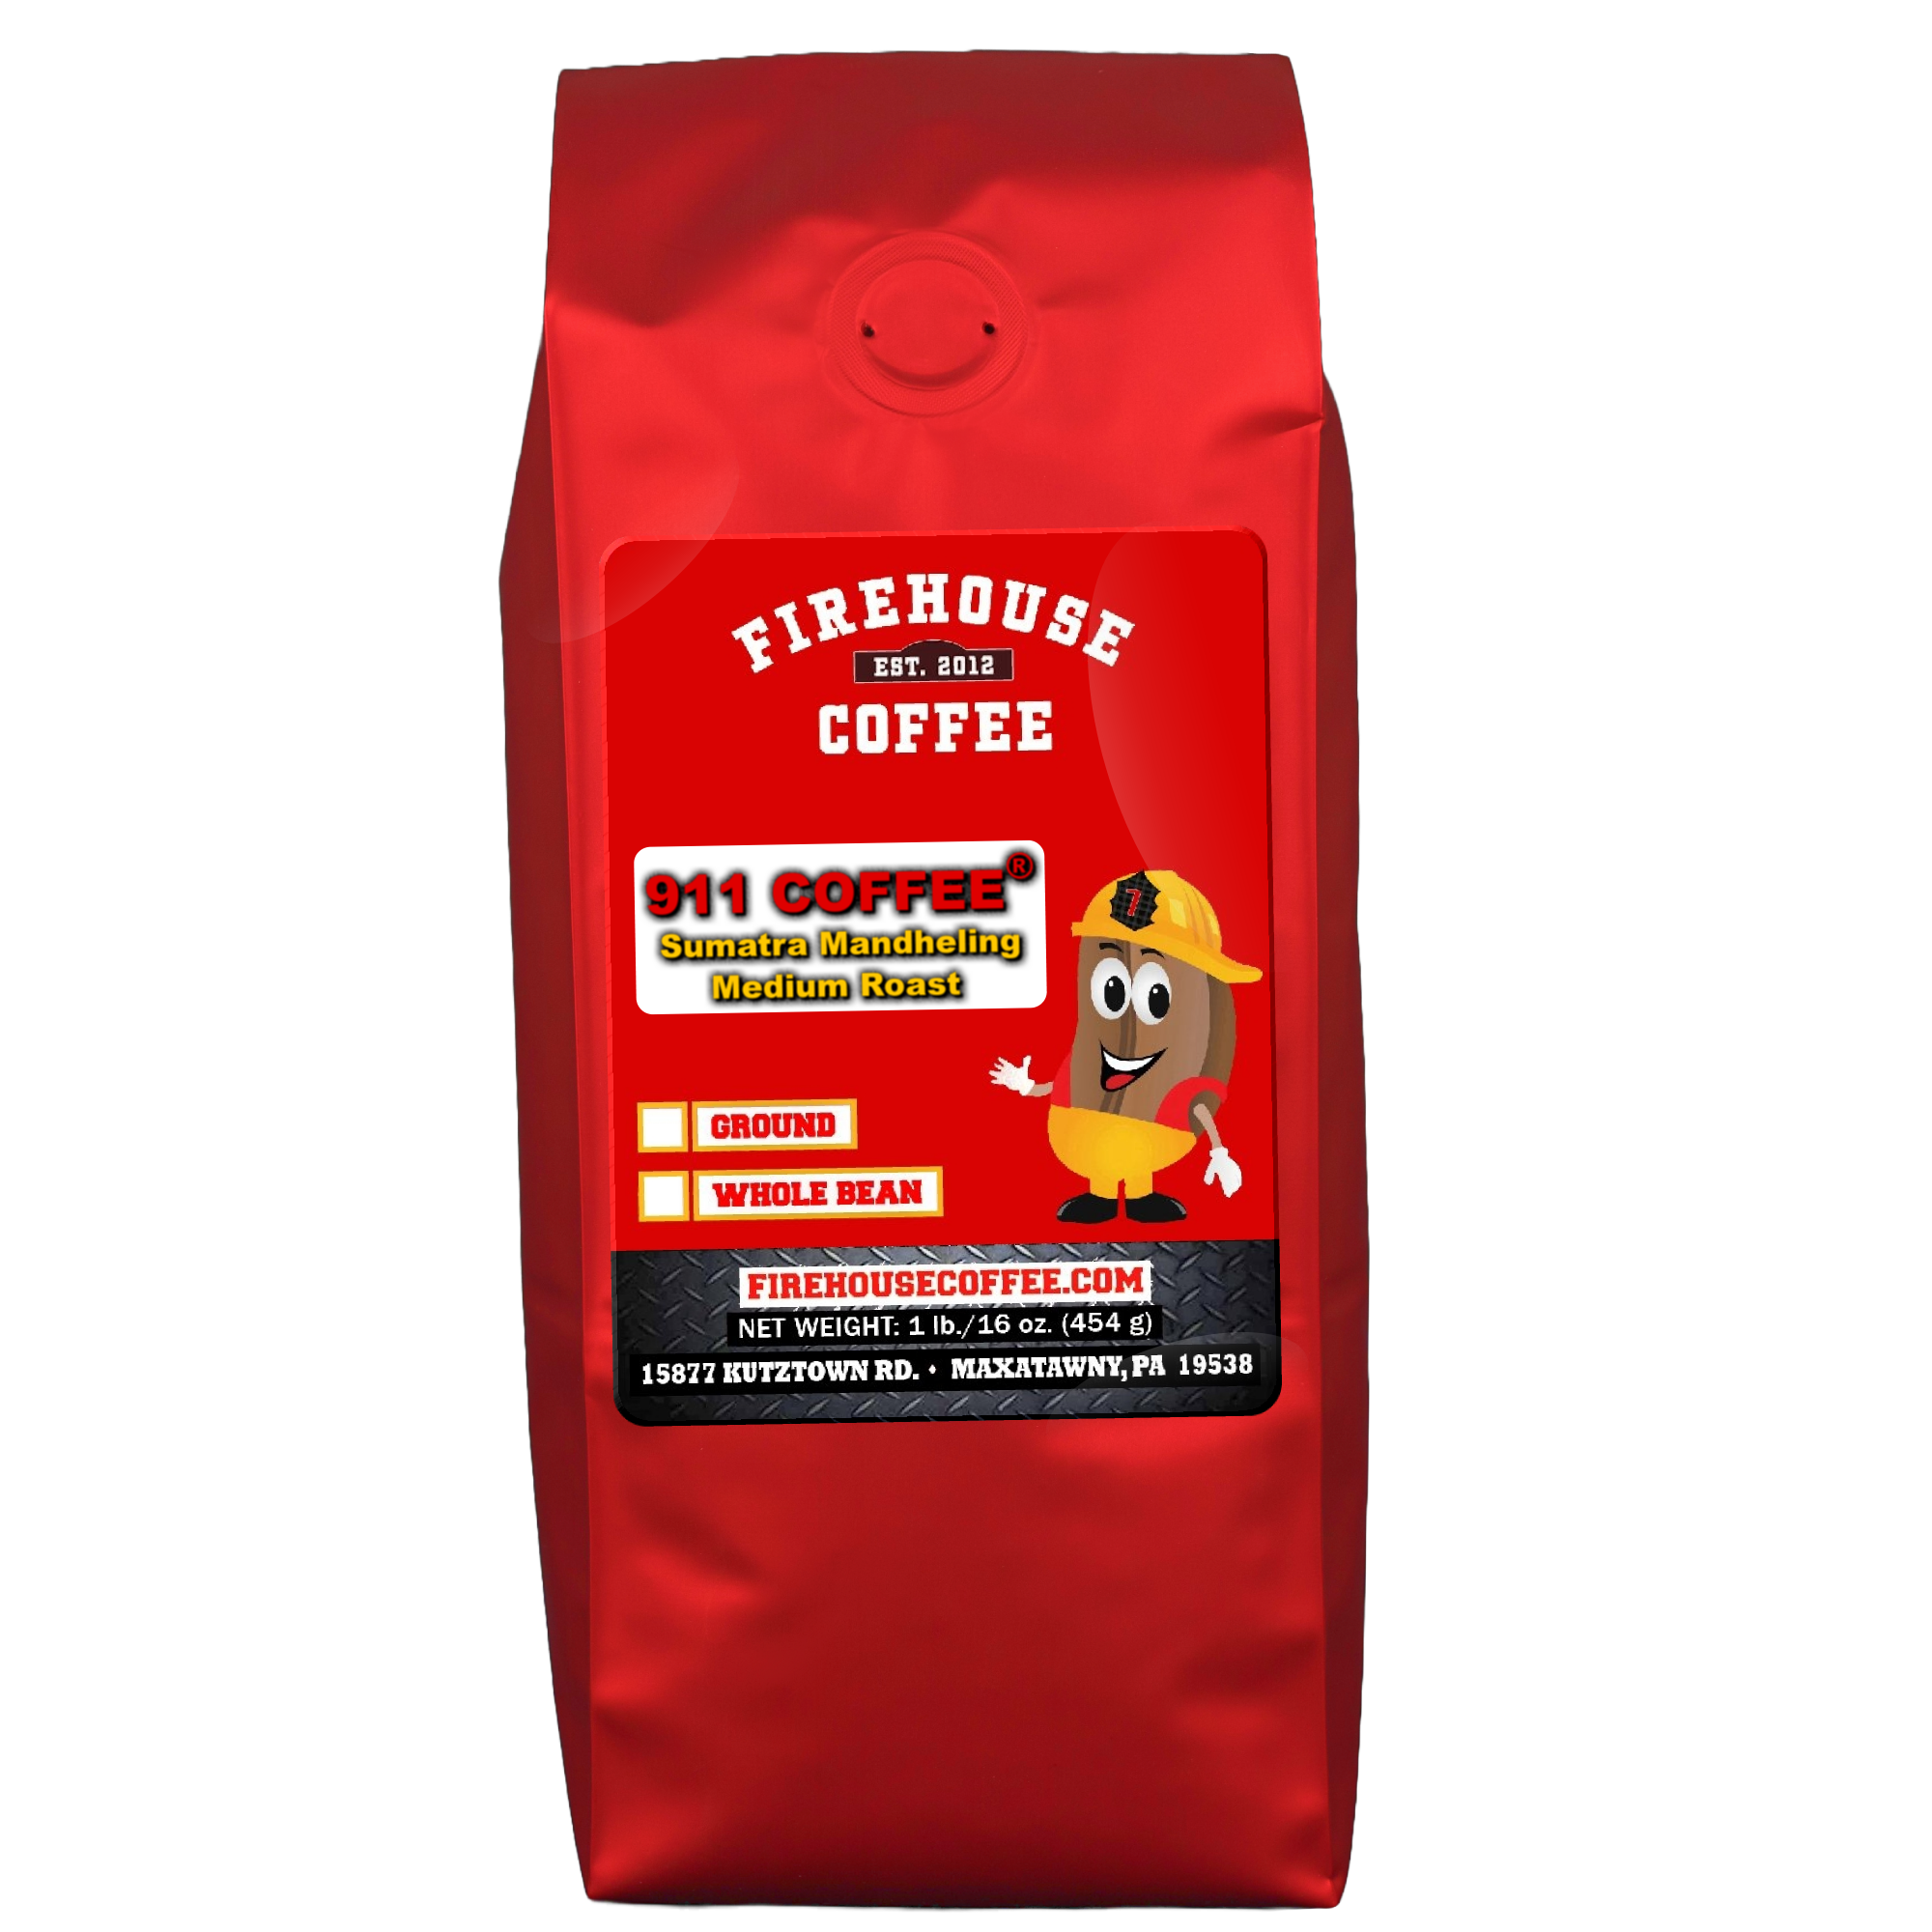 16 oz bag of Sumatra Mandheling Coffee